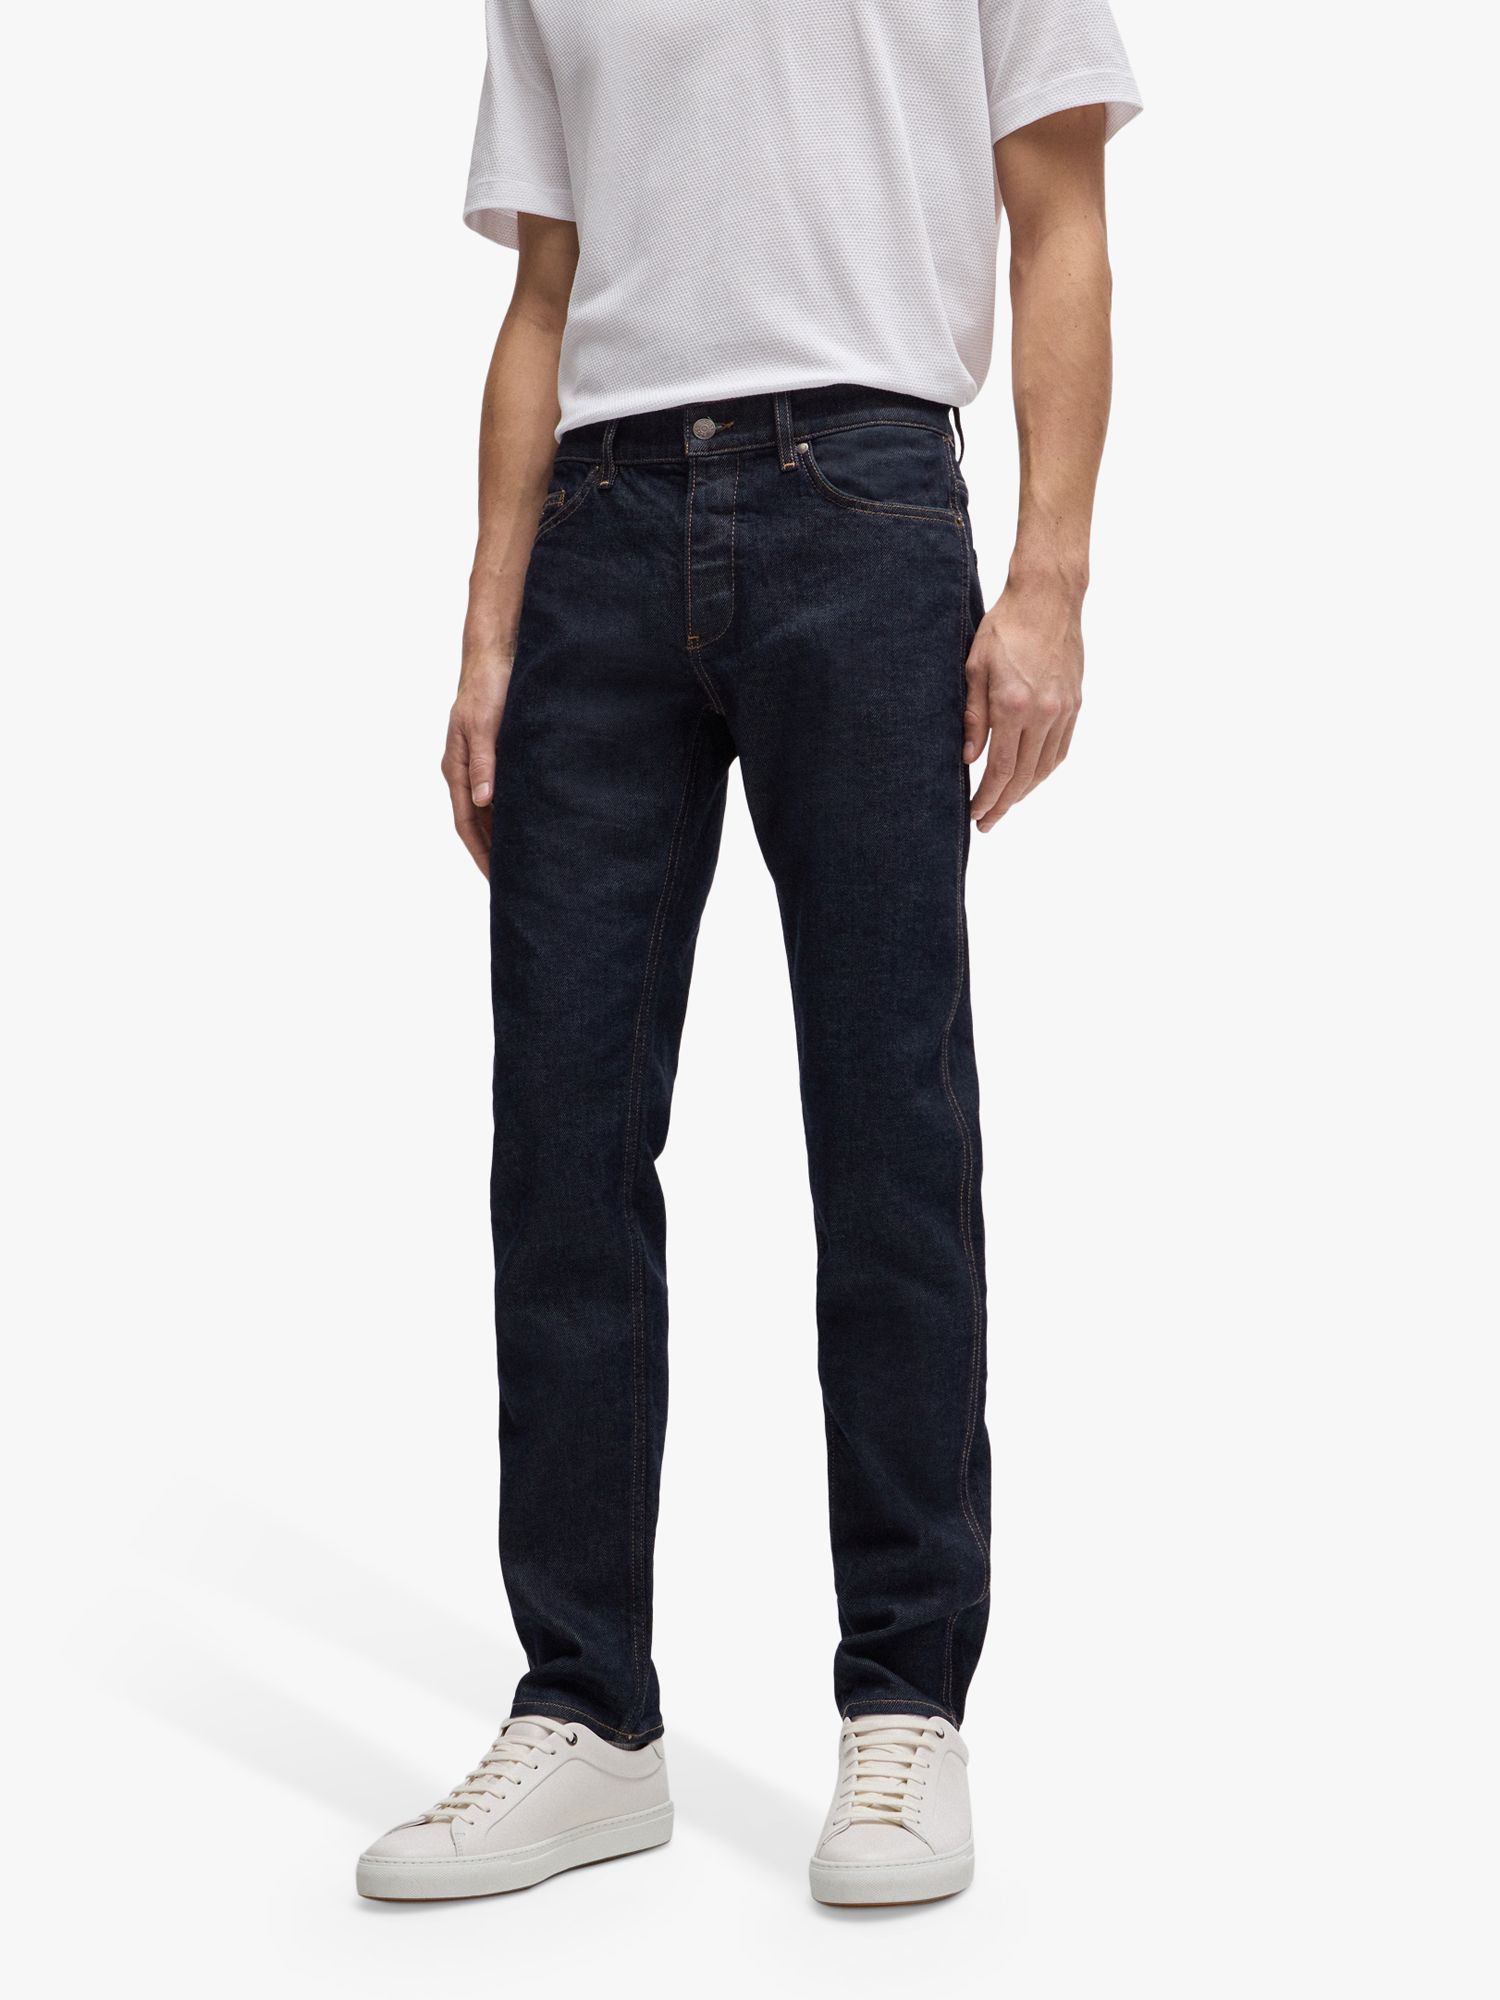 BOSS Delaware3 Slim Fit Jeans, Navy, 31R